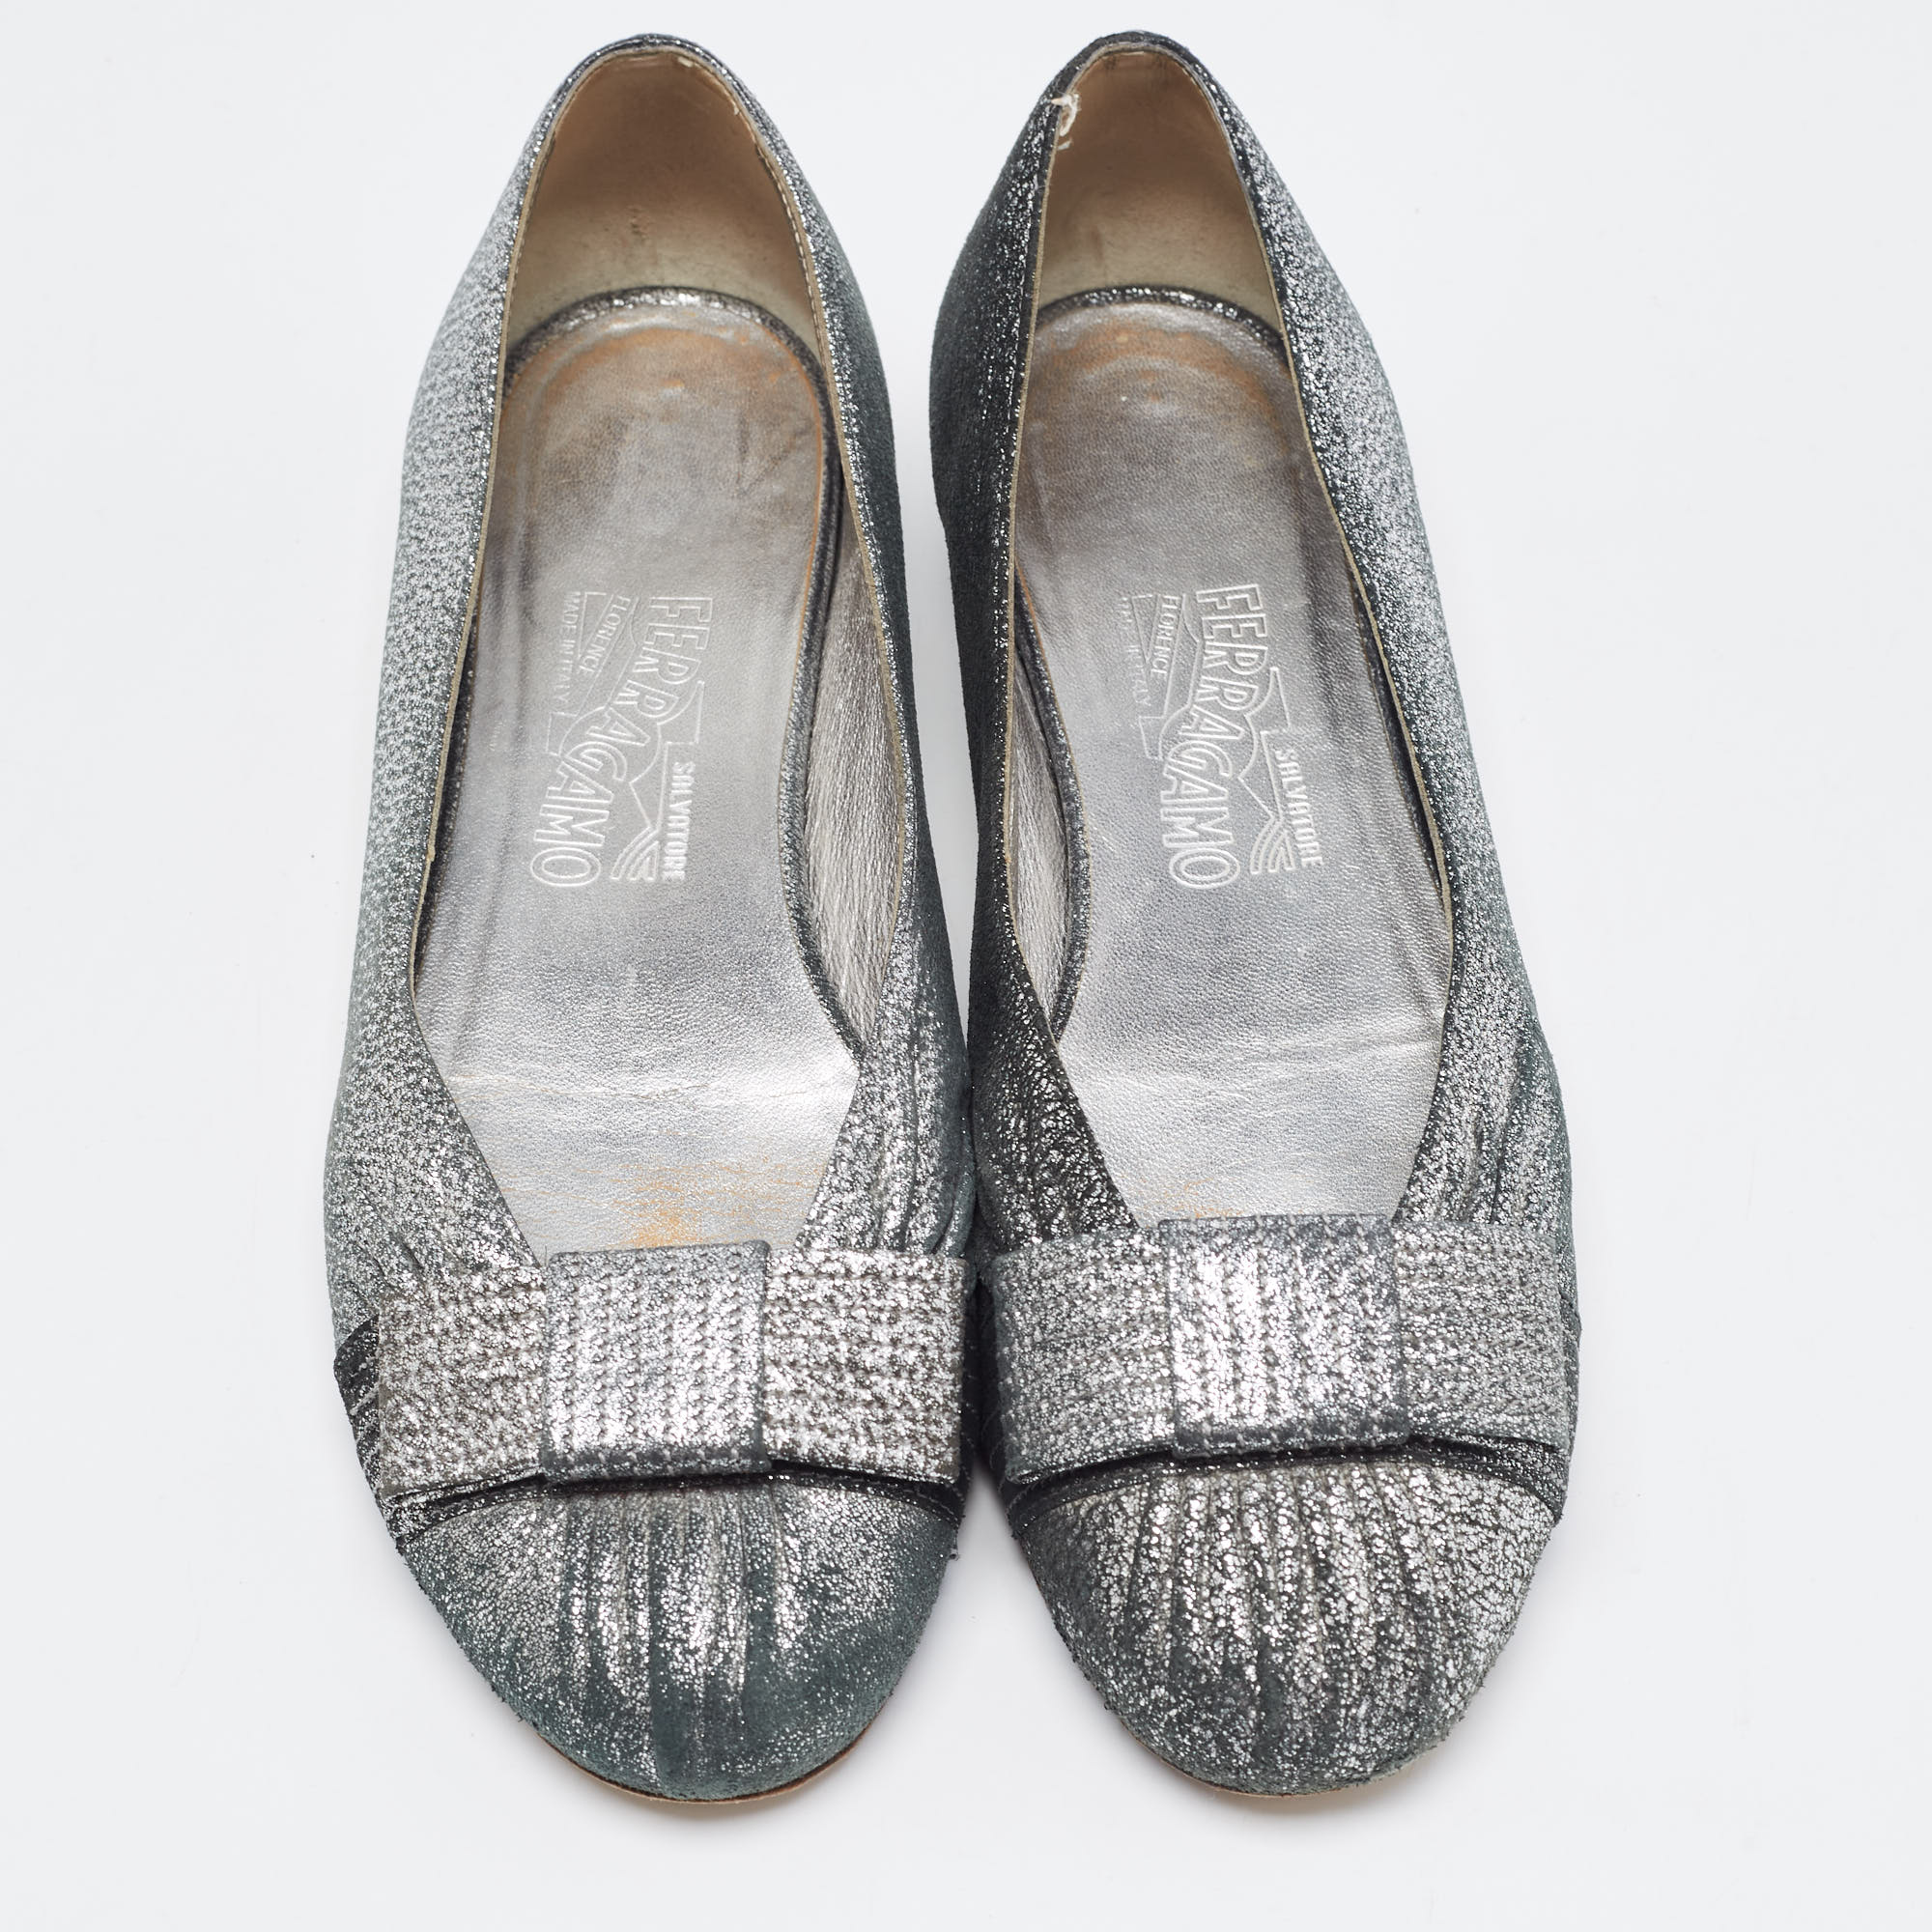 Salvatore Ferragamo Metallic Silver Suede Bow Ballet Flats Size 39.5